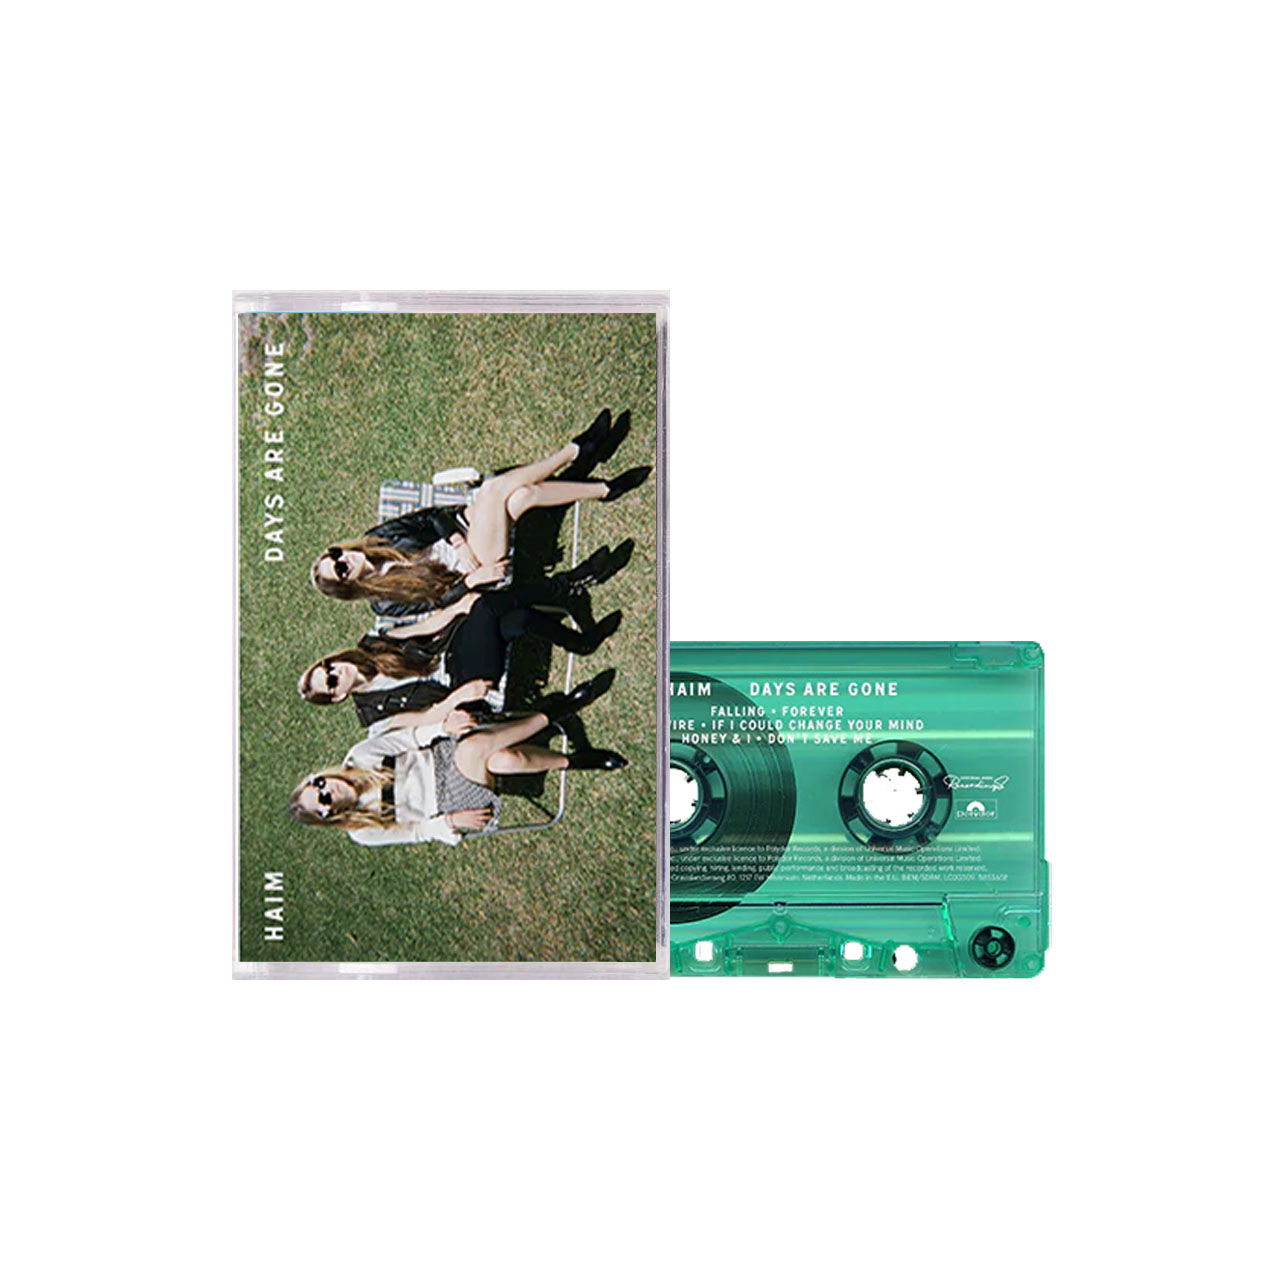 HAIM Days Are Gone 10th Anniversary Deluxe Green Cassette